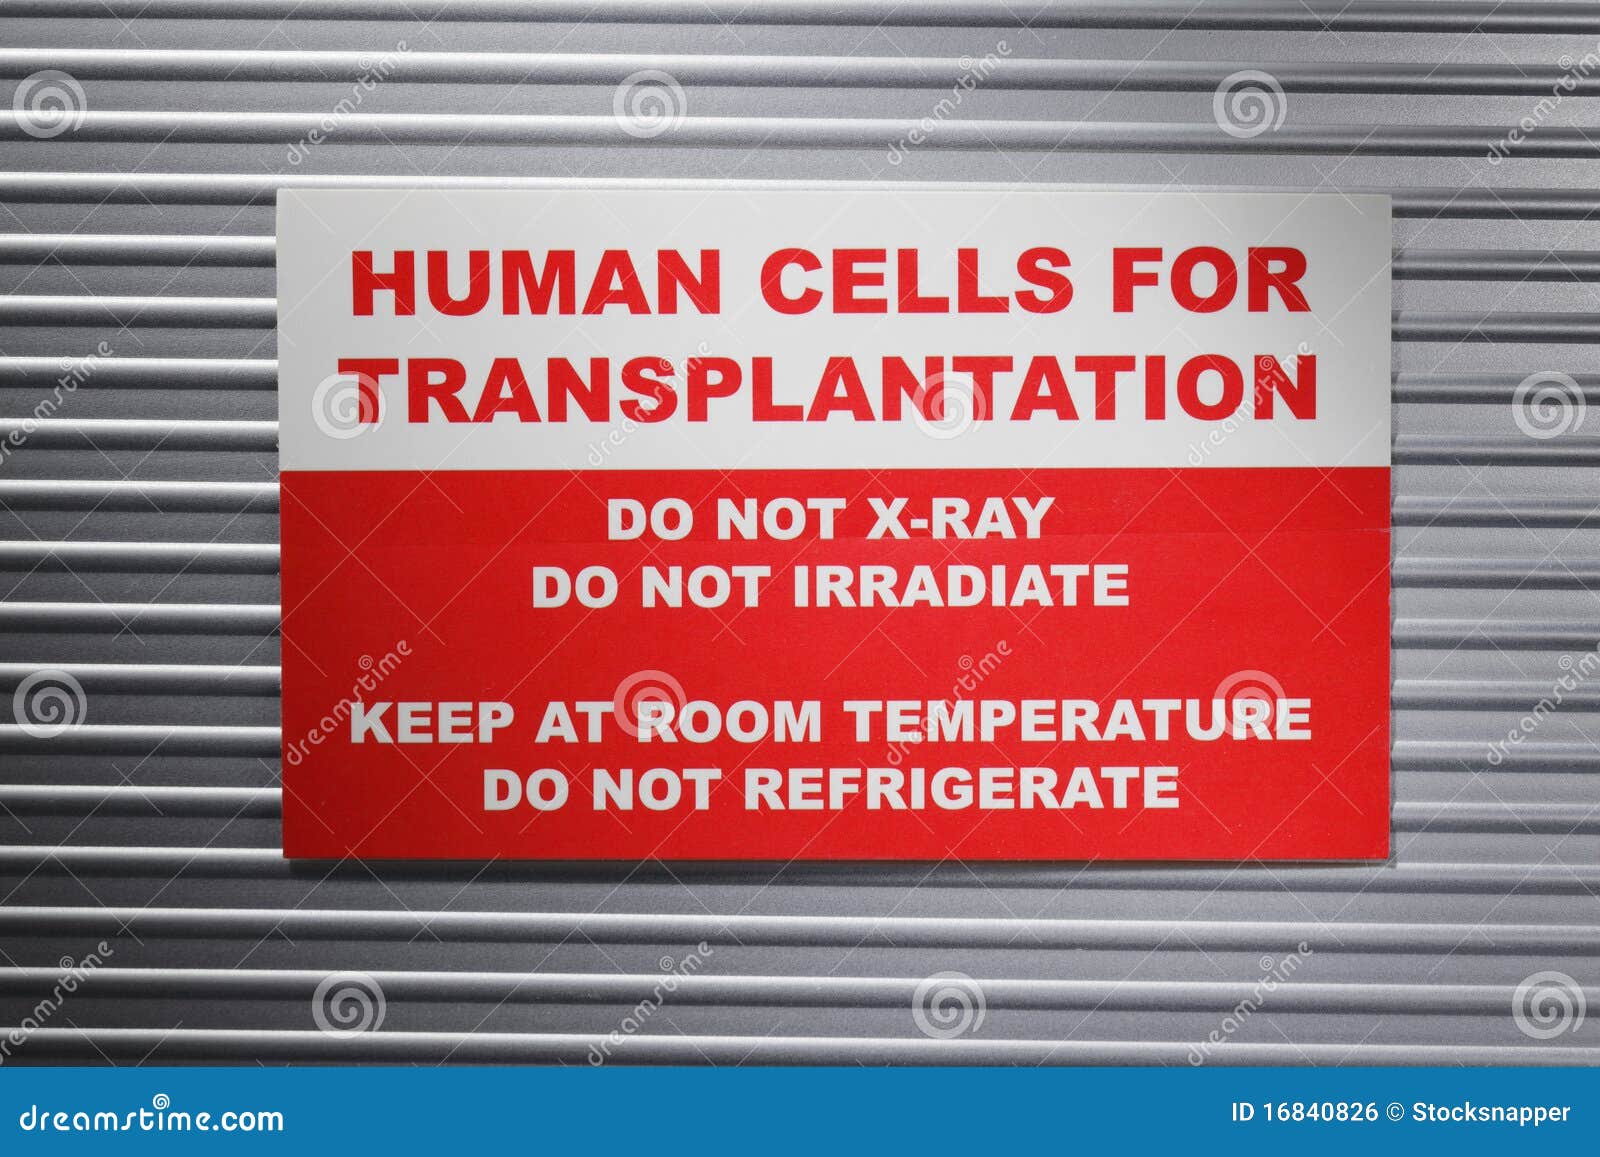 human cells for transplantation